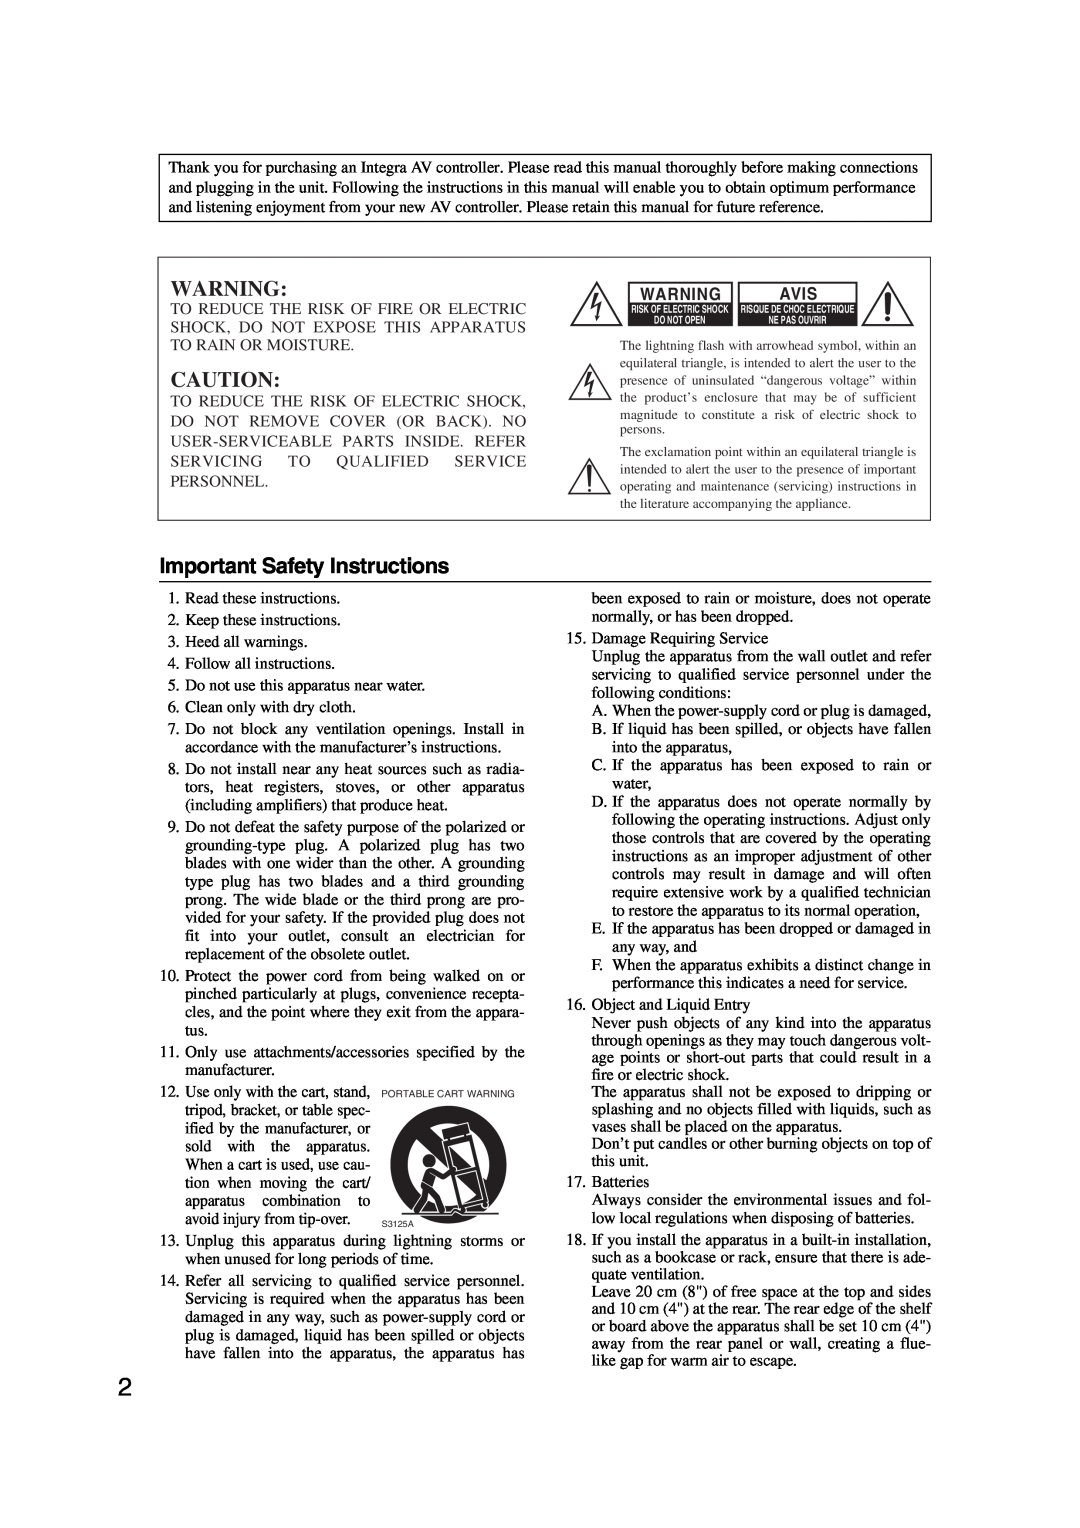 Integra DHC-9.9 instruction manual Important Safety Instructions, Avis 